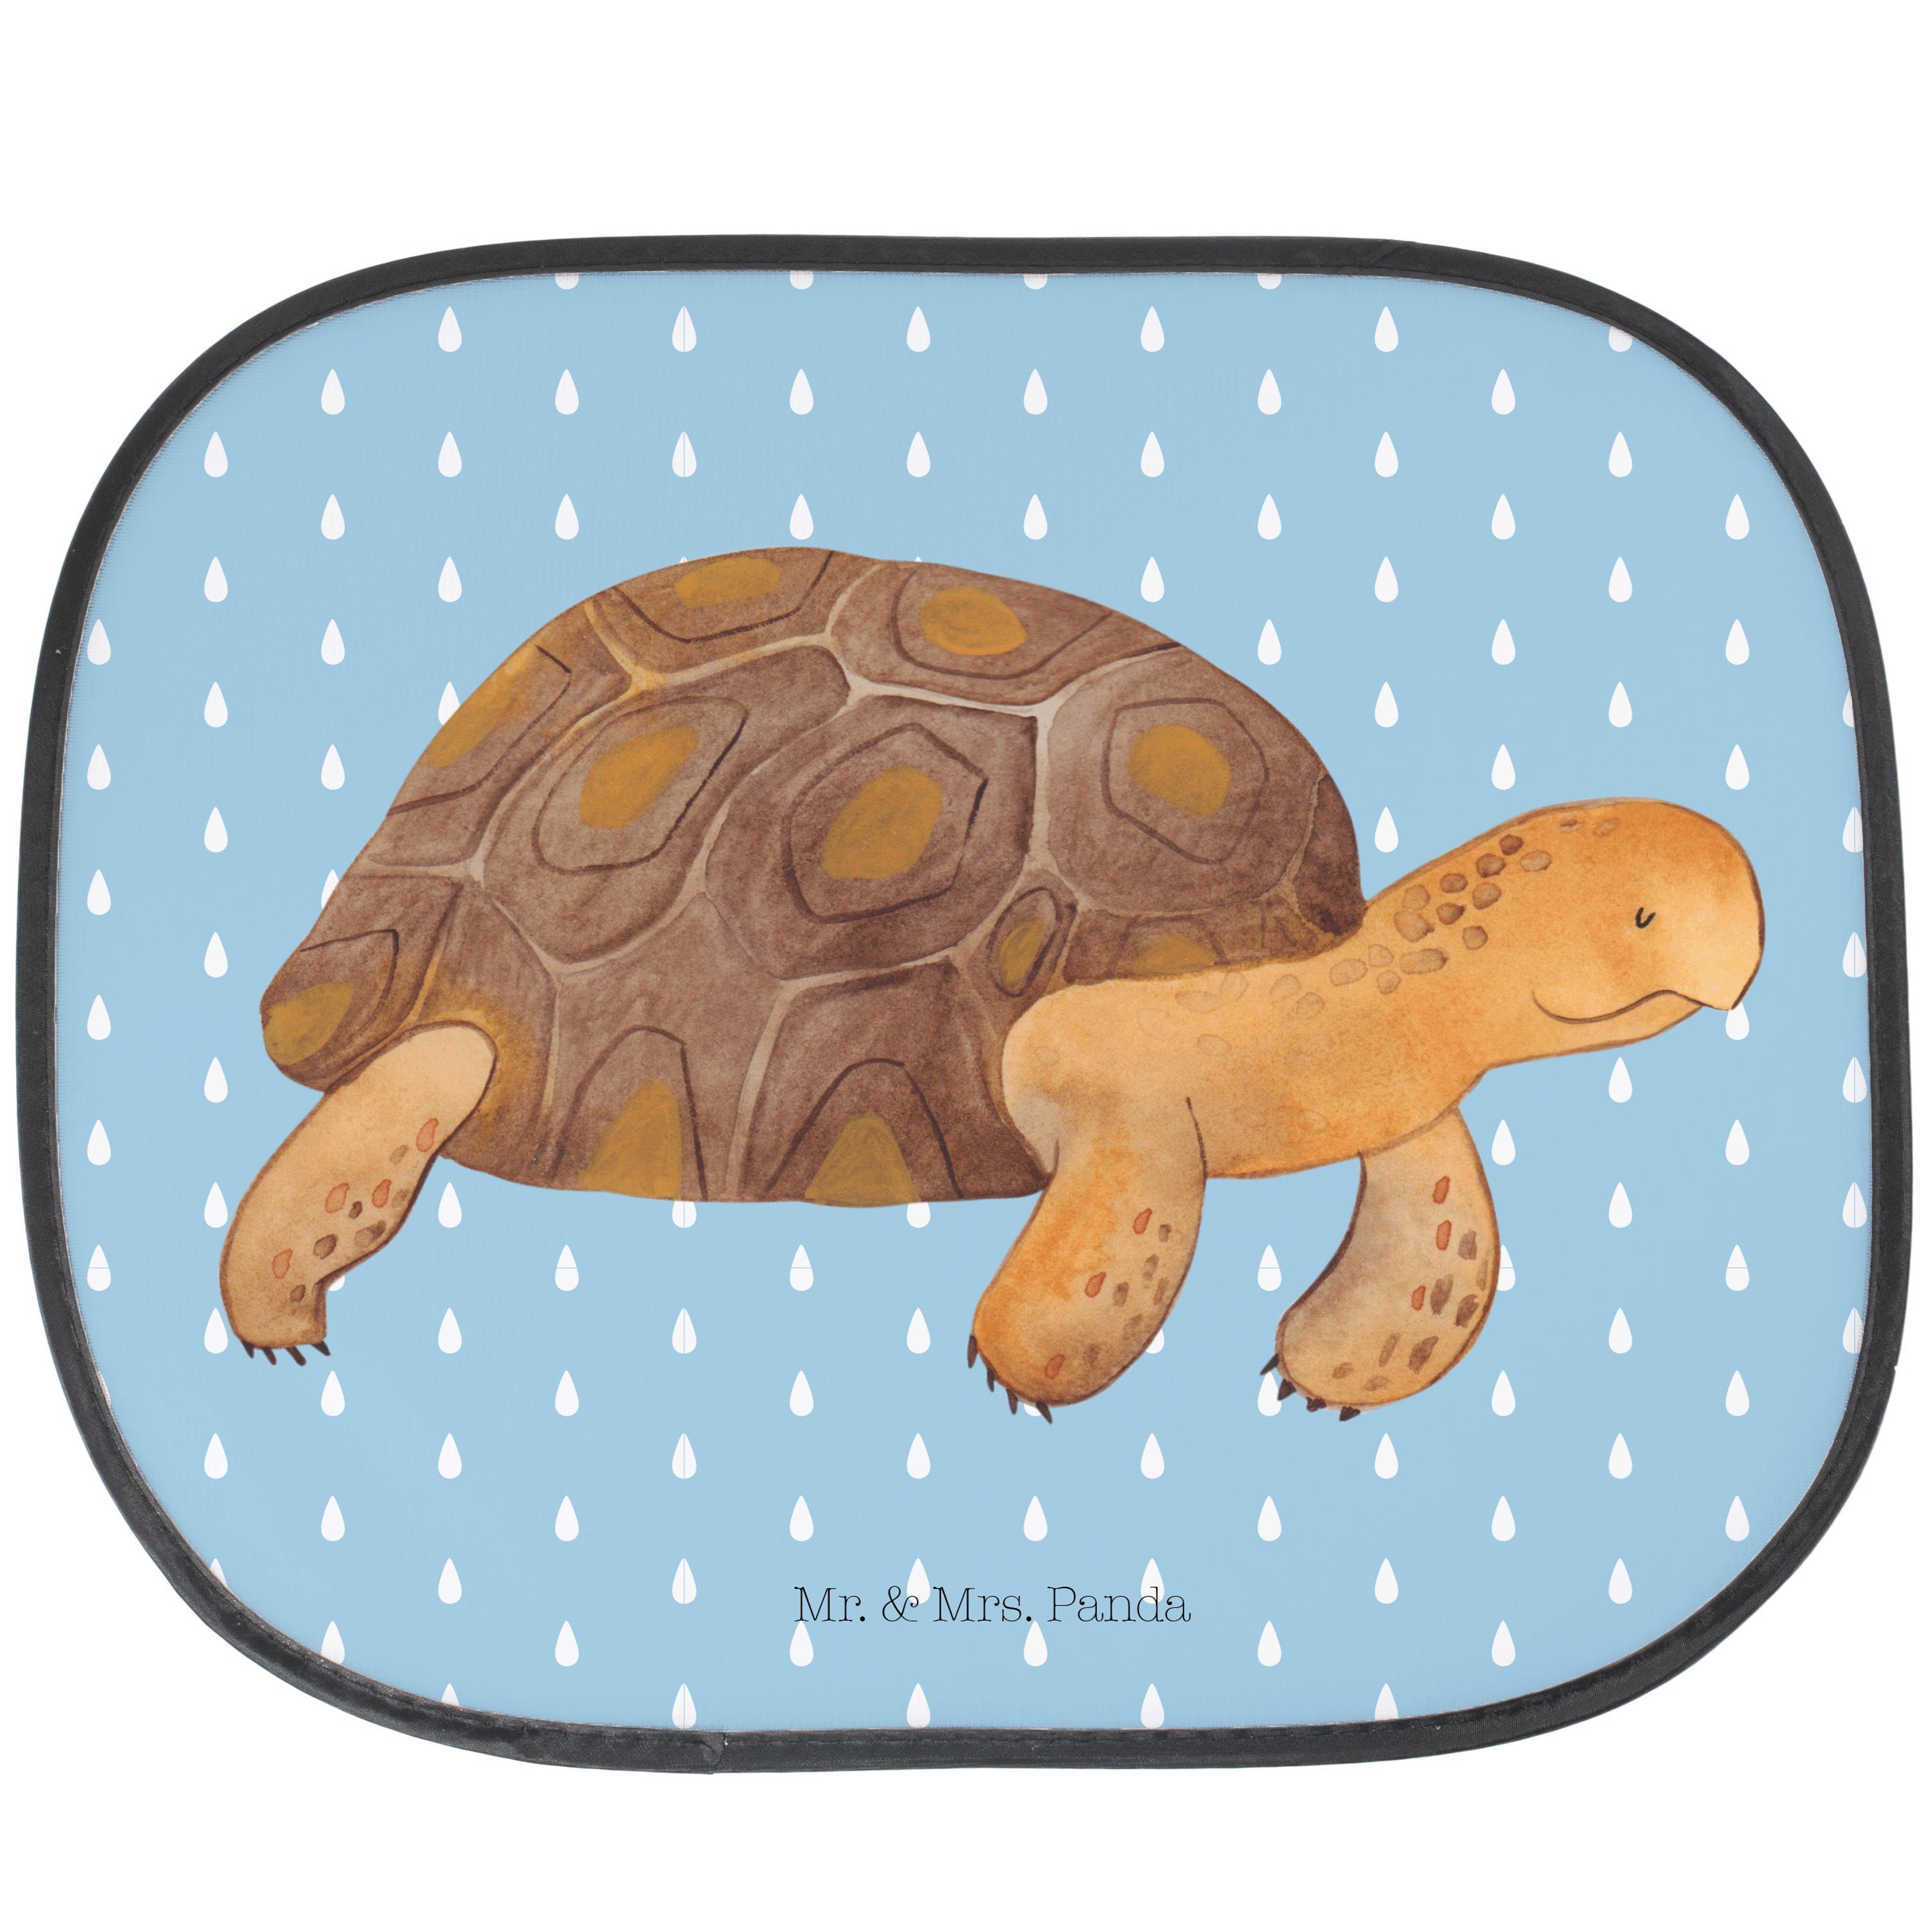 Sonnenschutz Schildkröte marschiert - Blau Pastell - Geschenk, Sonne, Meerestiere, Mr. & Mrs. Panda, Seidenmatt